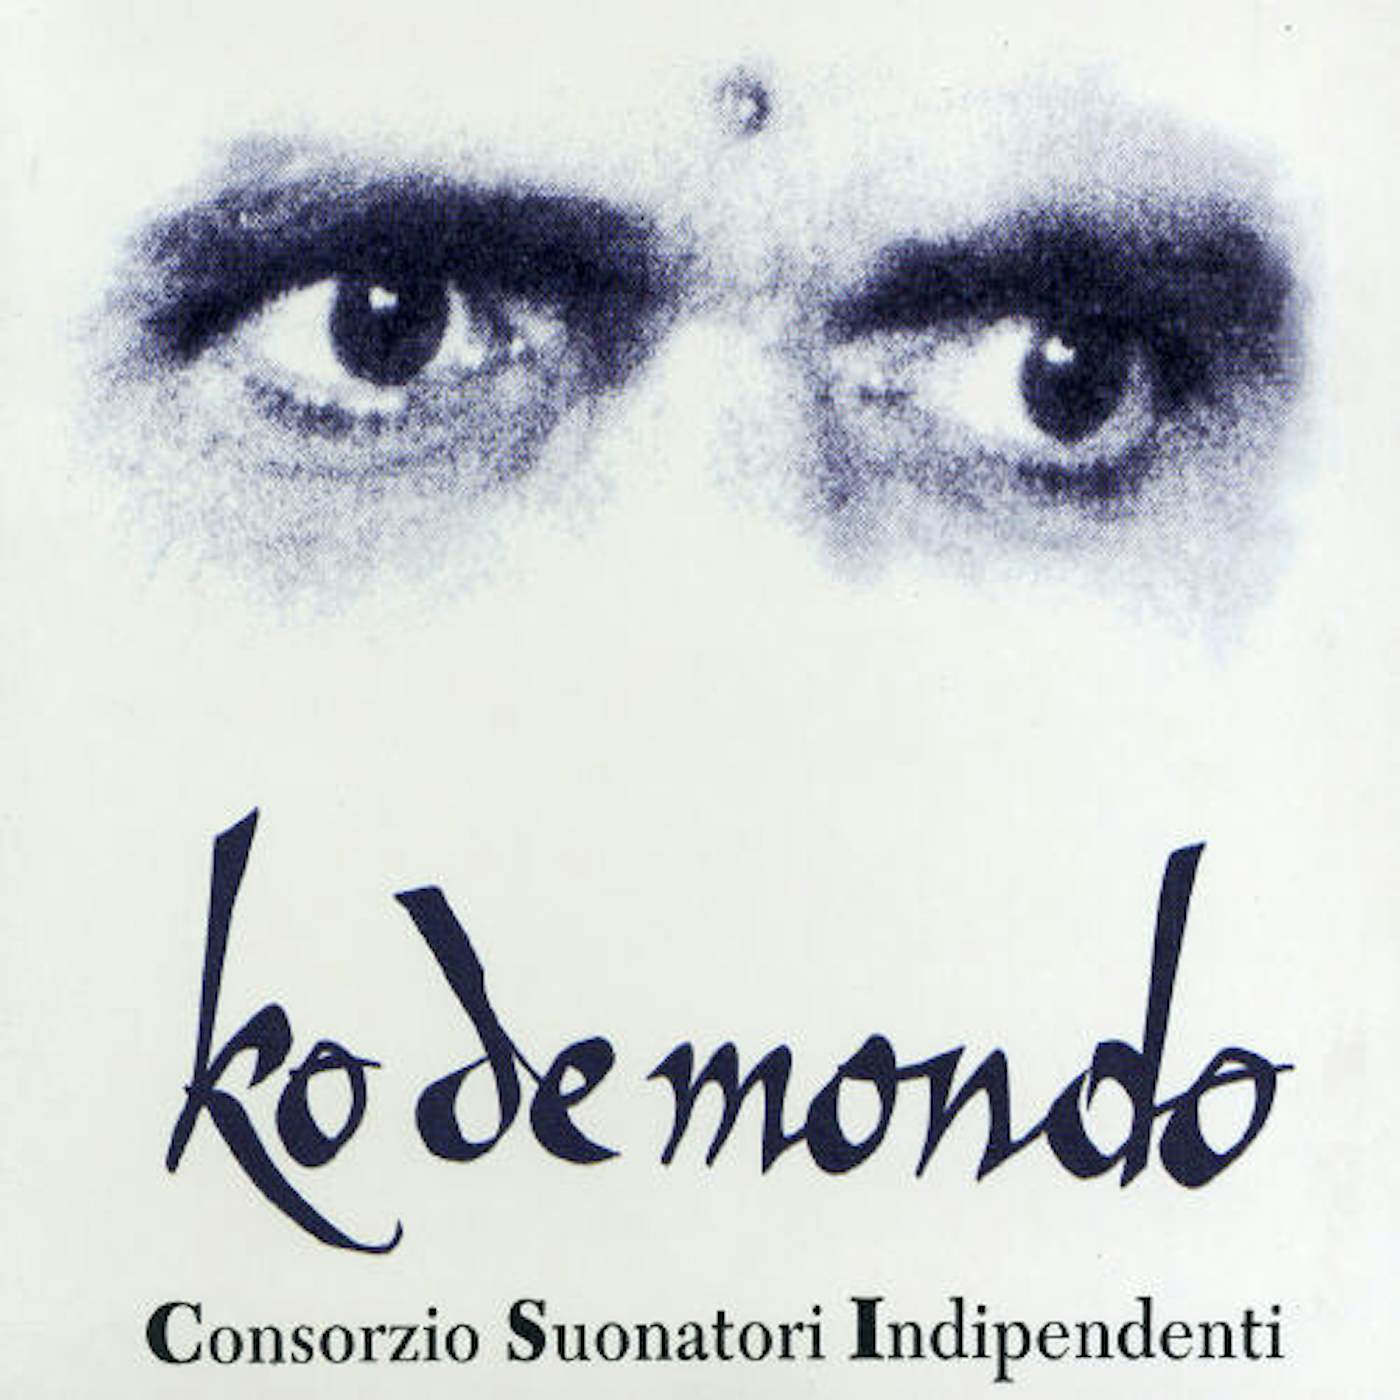 C.S.I. KO DE MONDO CD